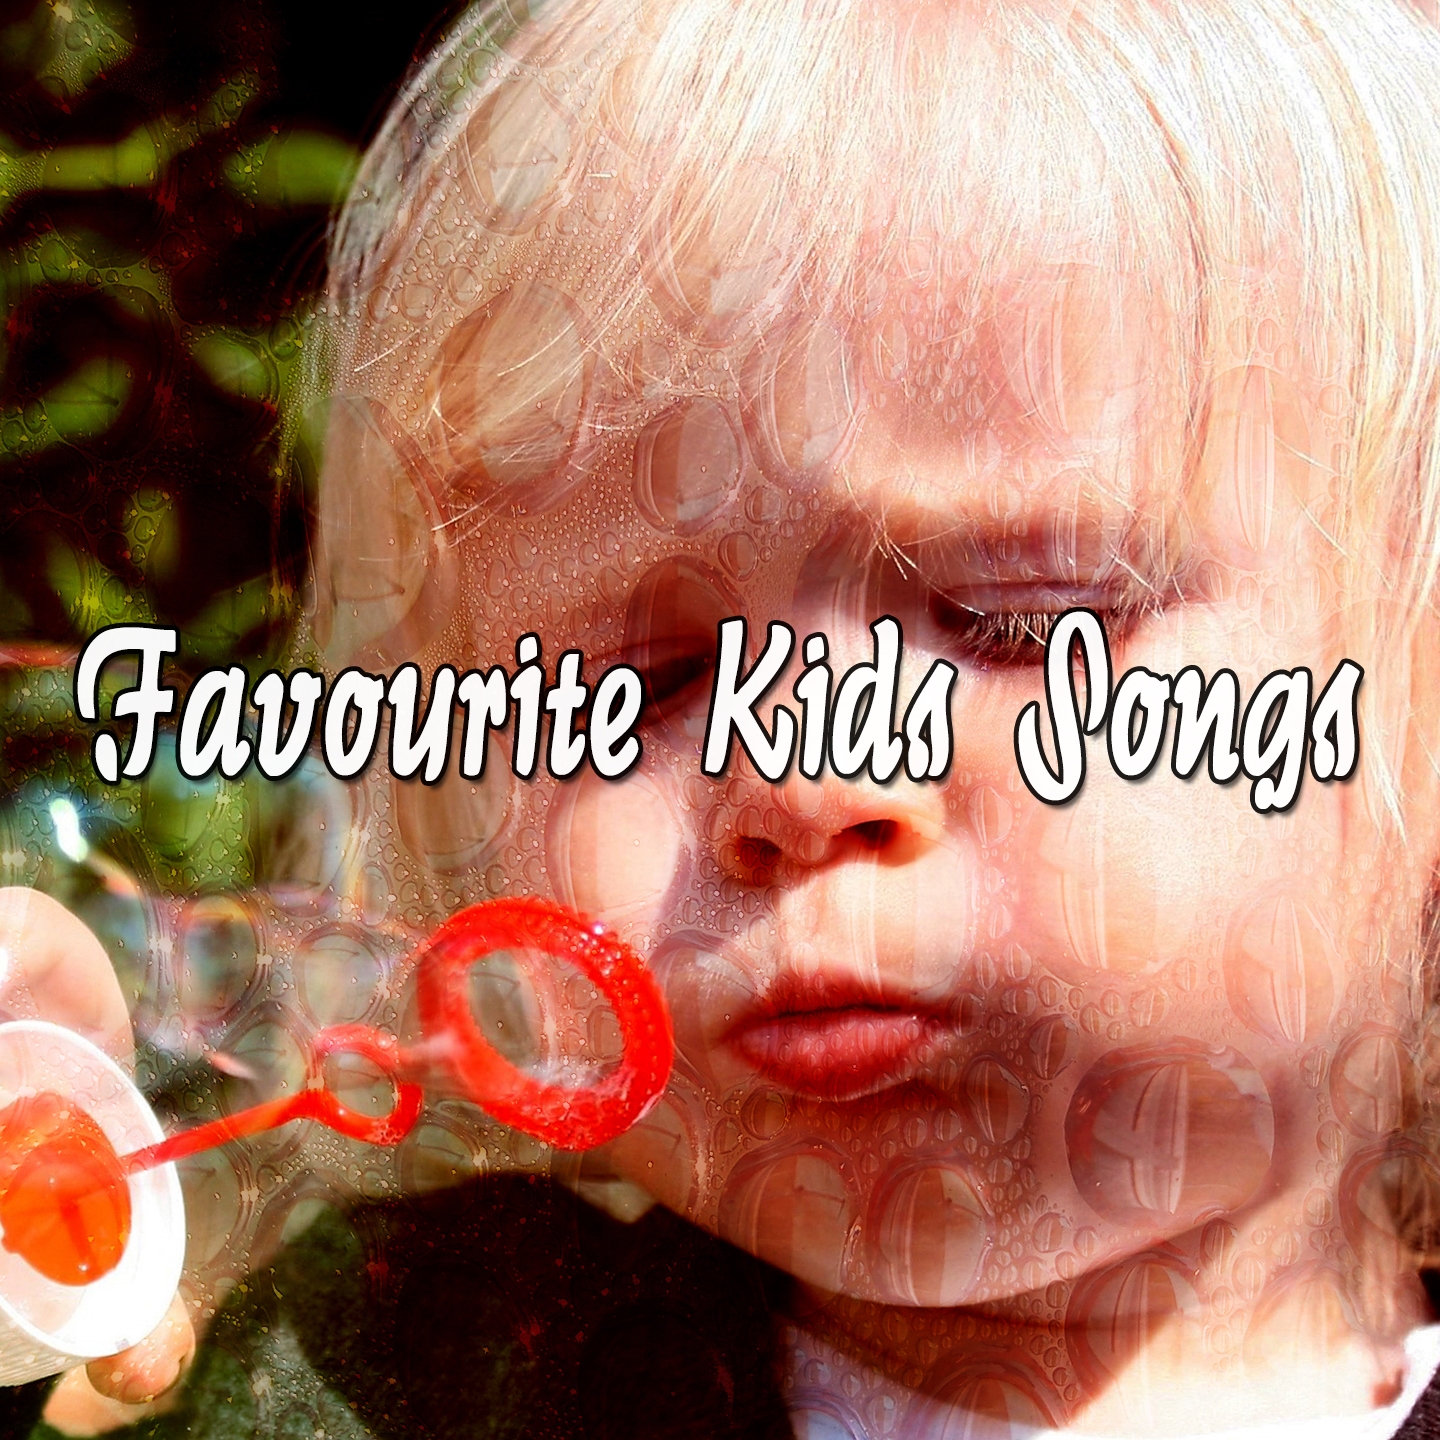 Favourite Kids Songs